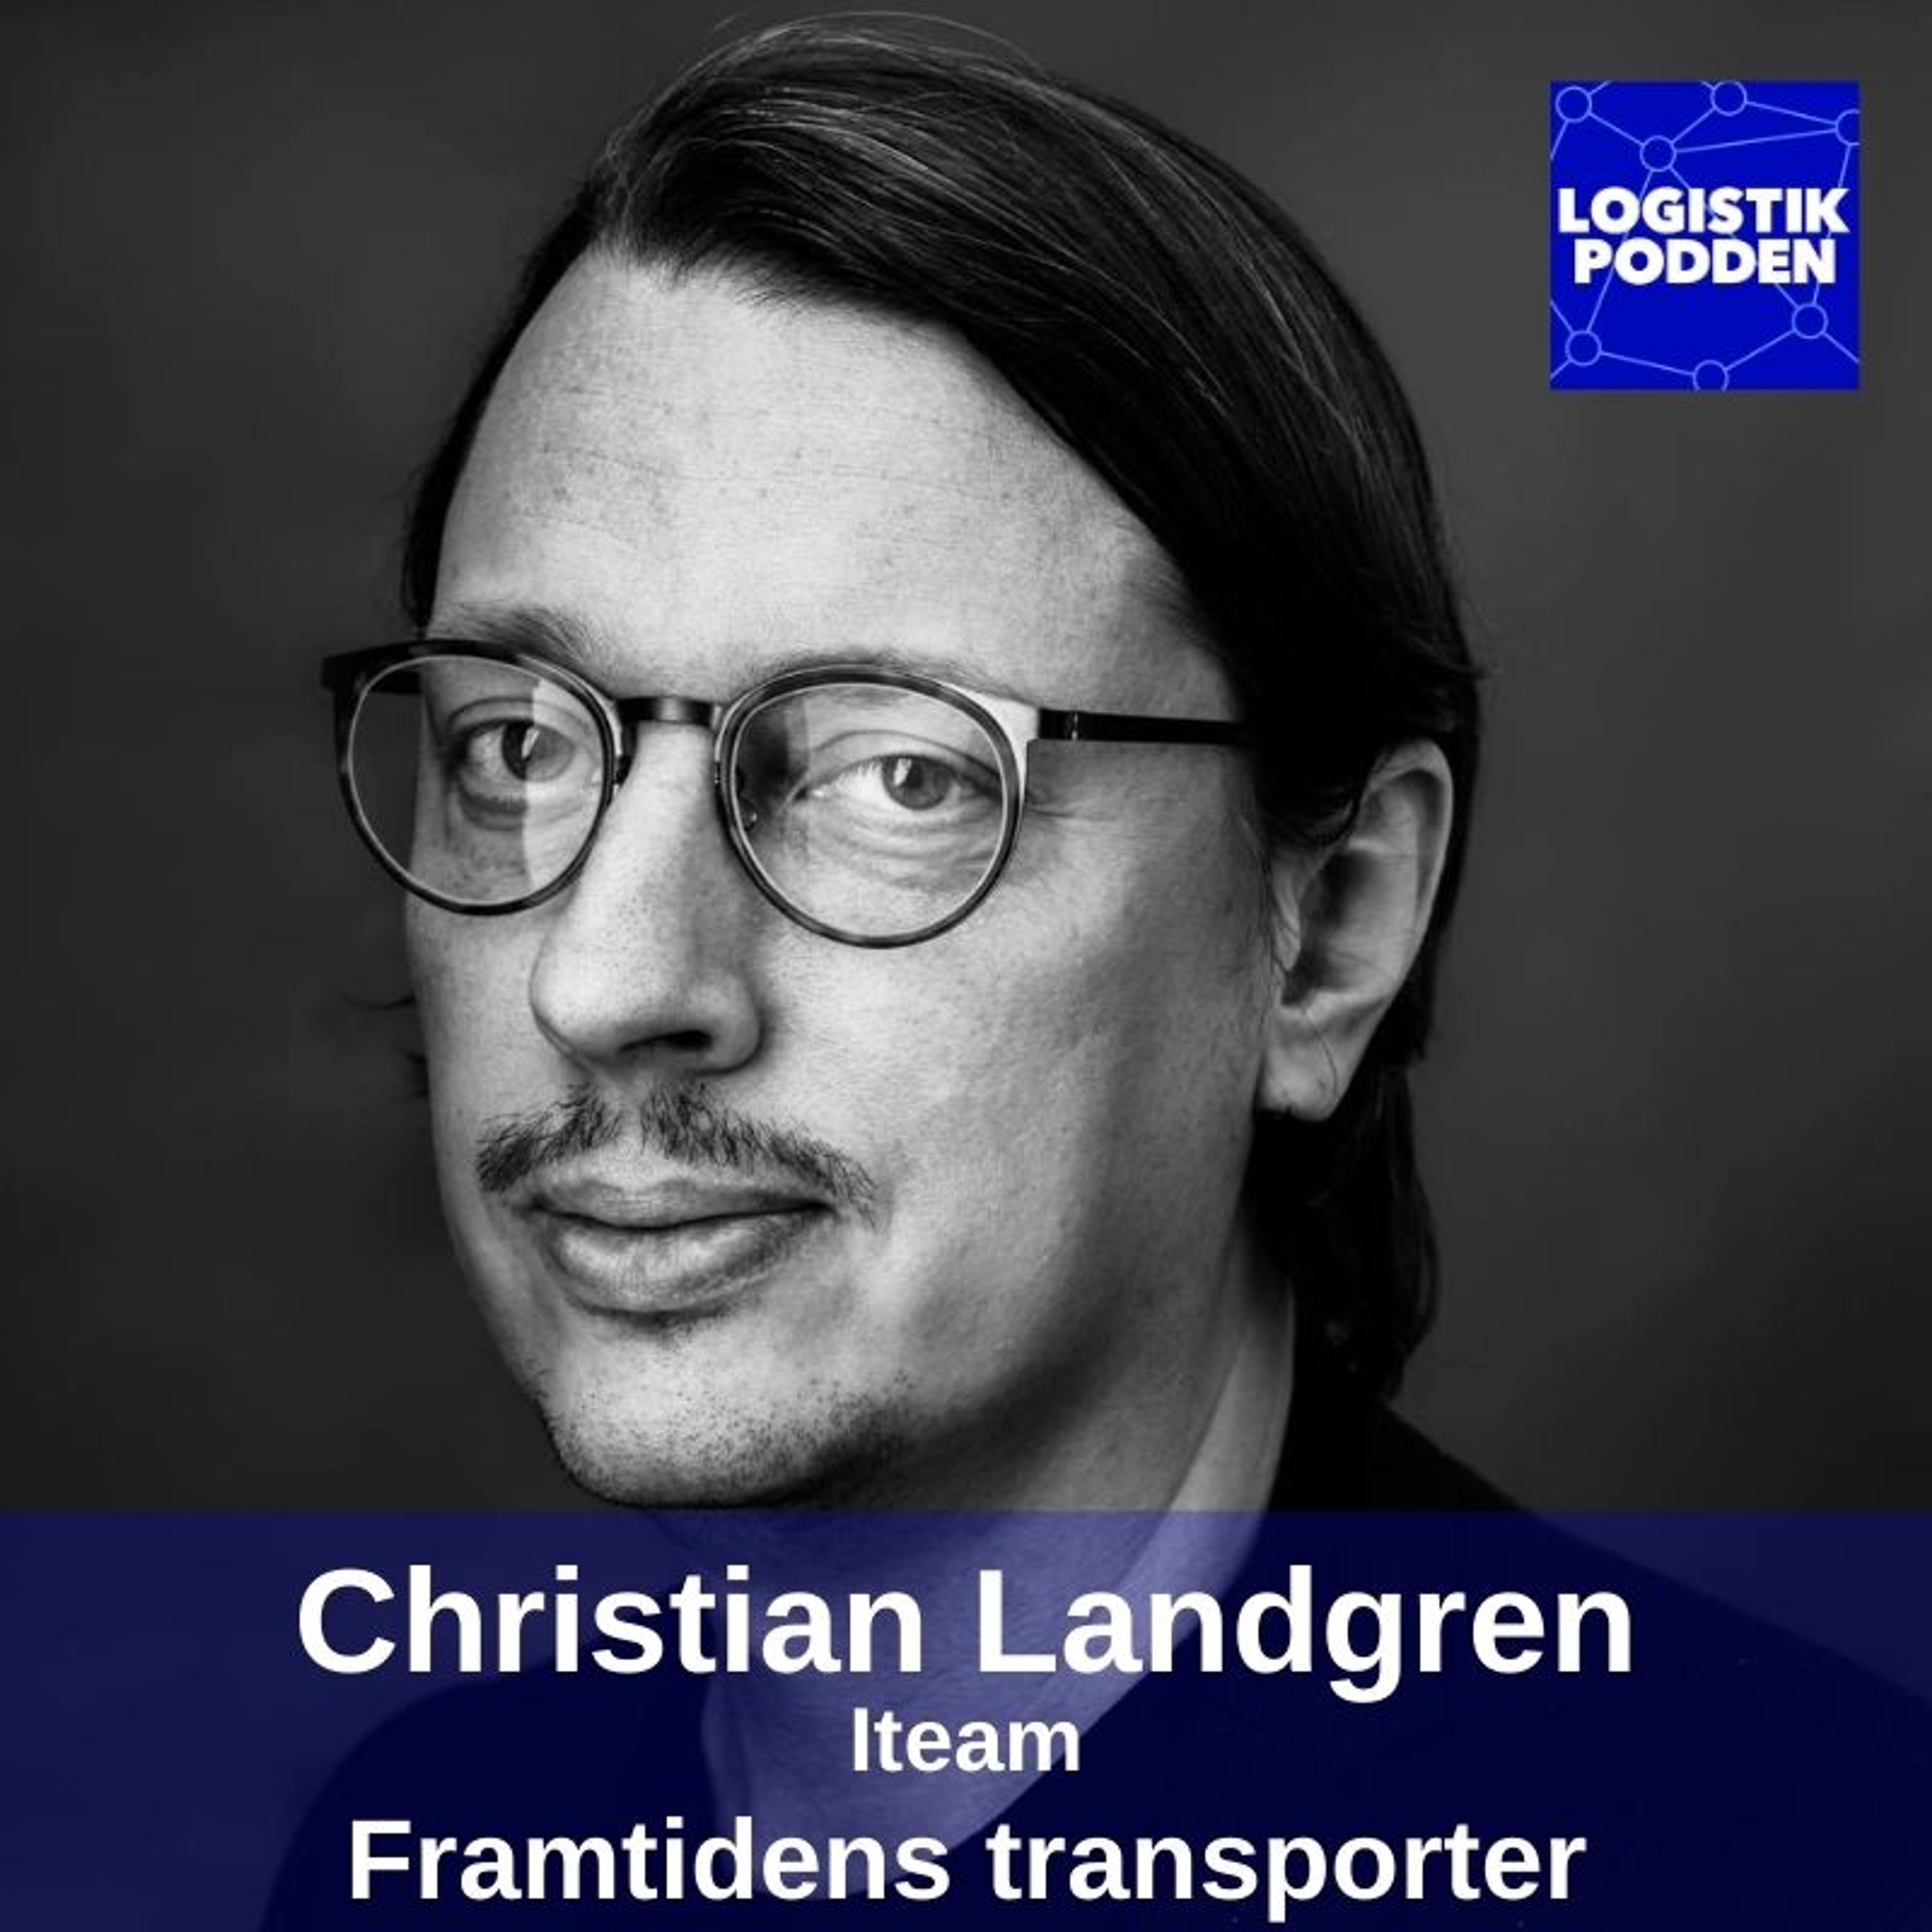 Christian Landgren är med i Logistikpodden